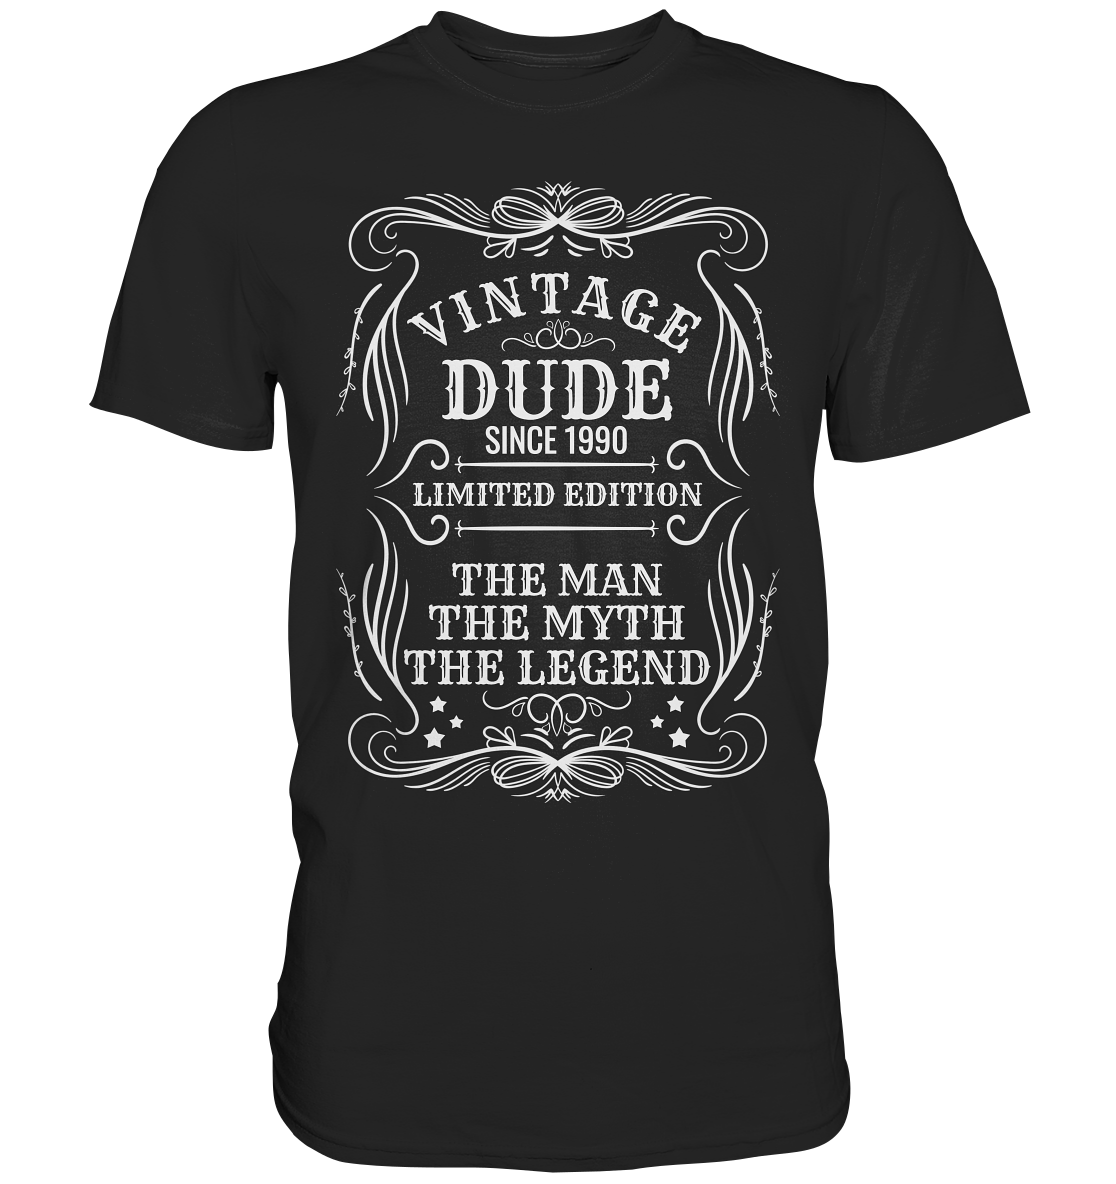 Vintage Dude. The man, the myth, the legend. - Unisex Premium Shirt